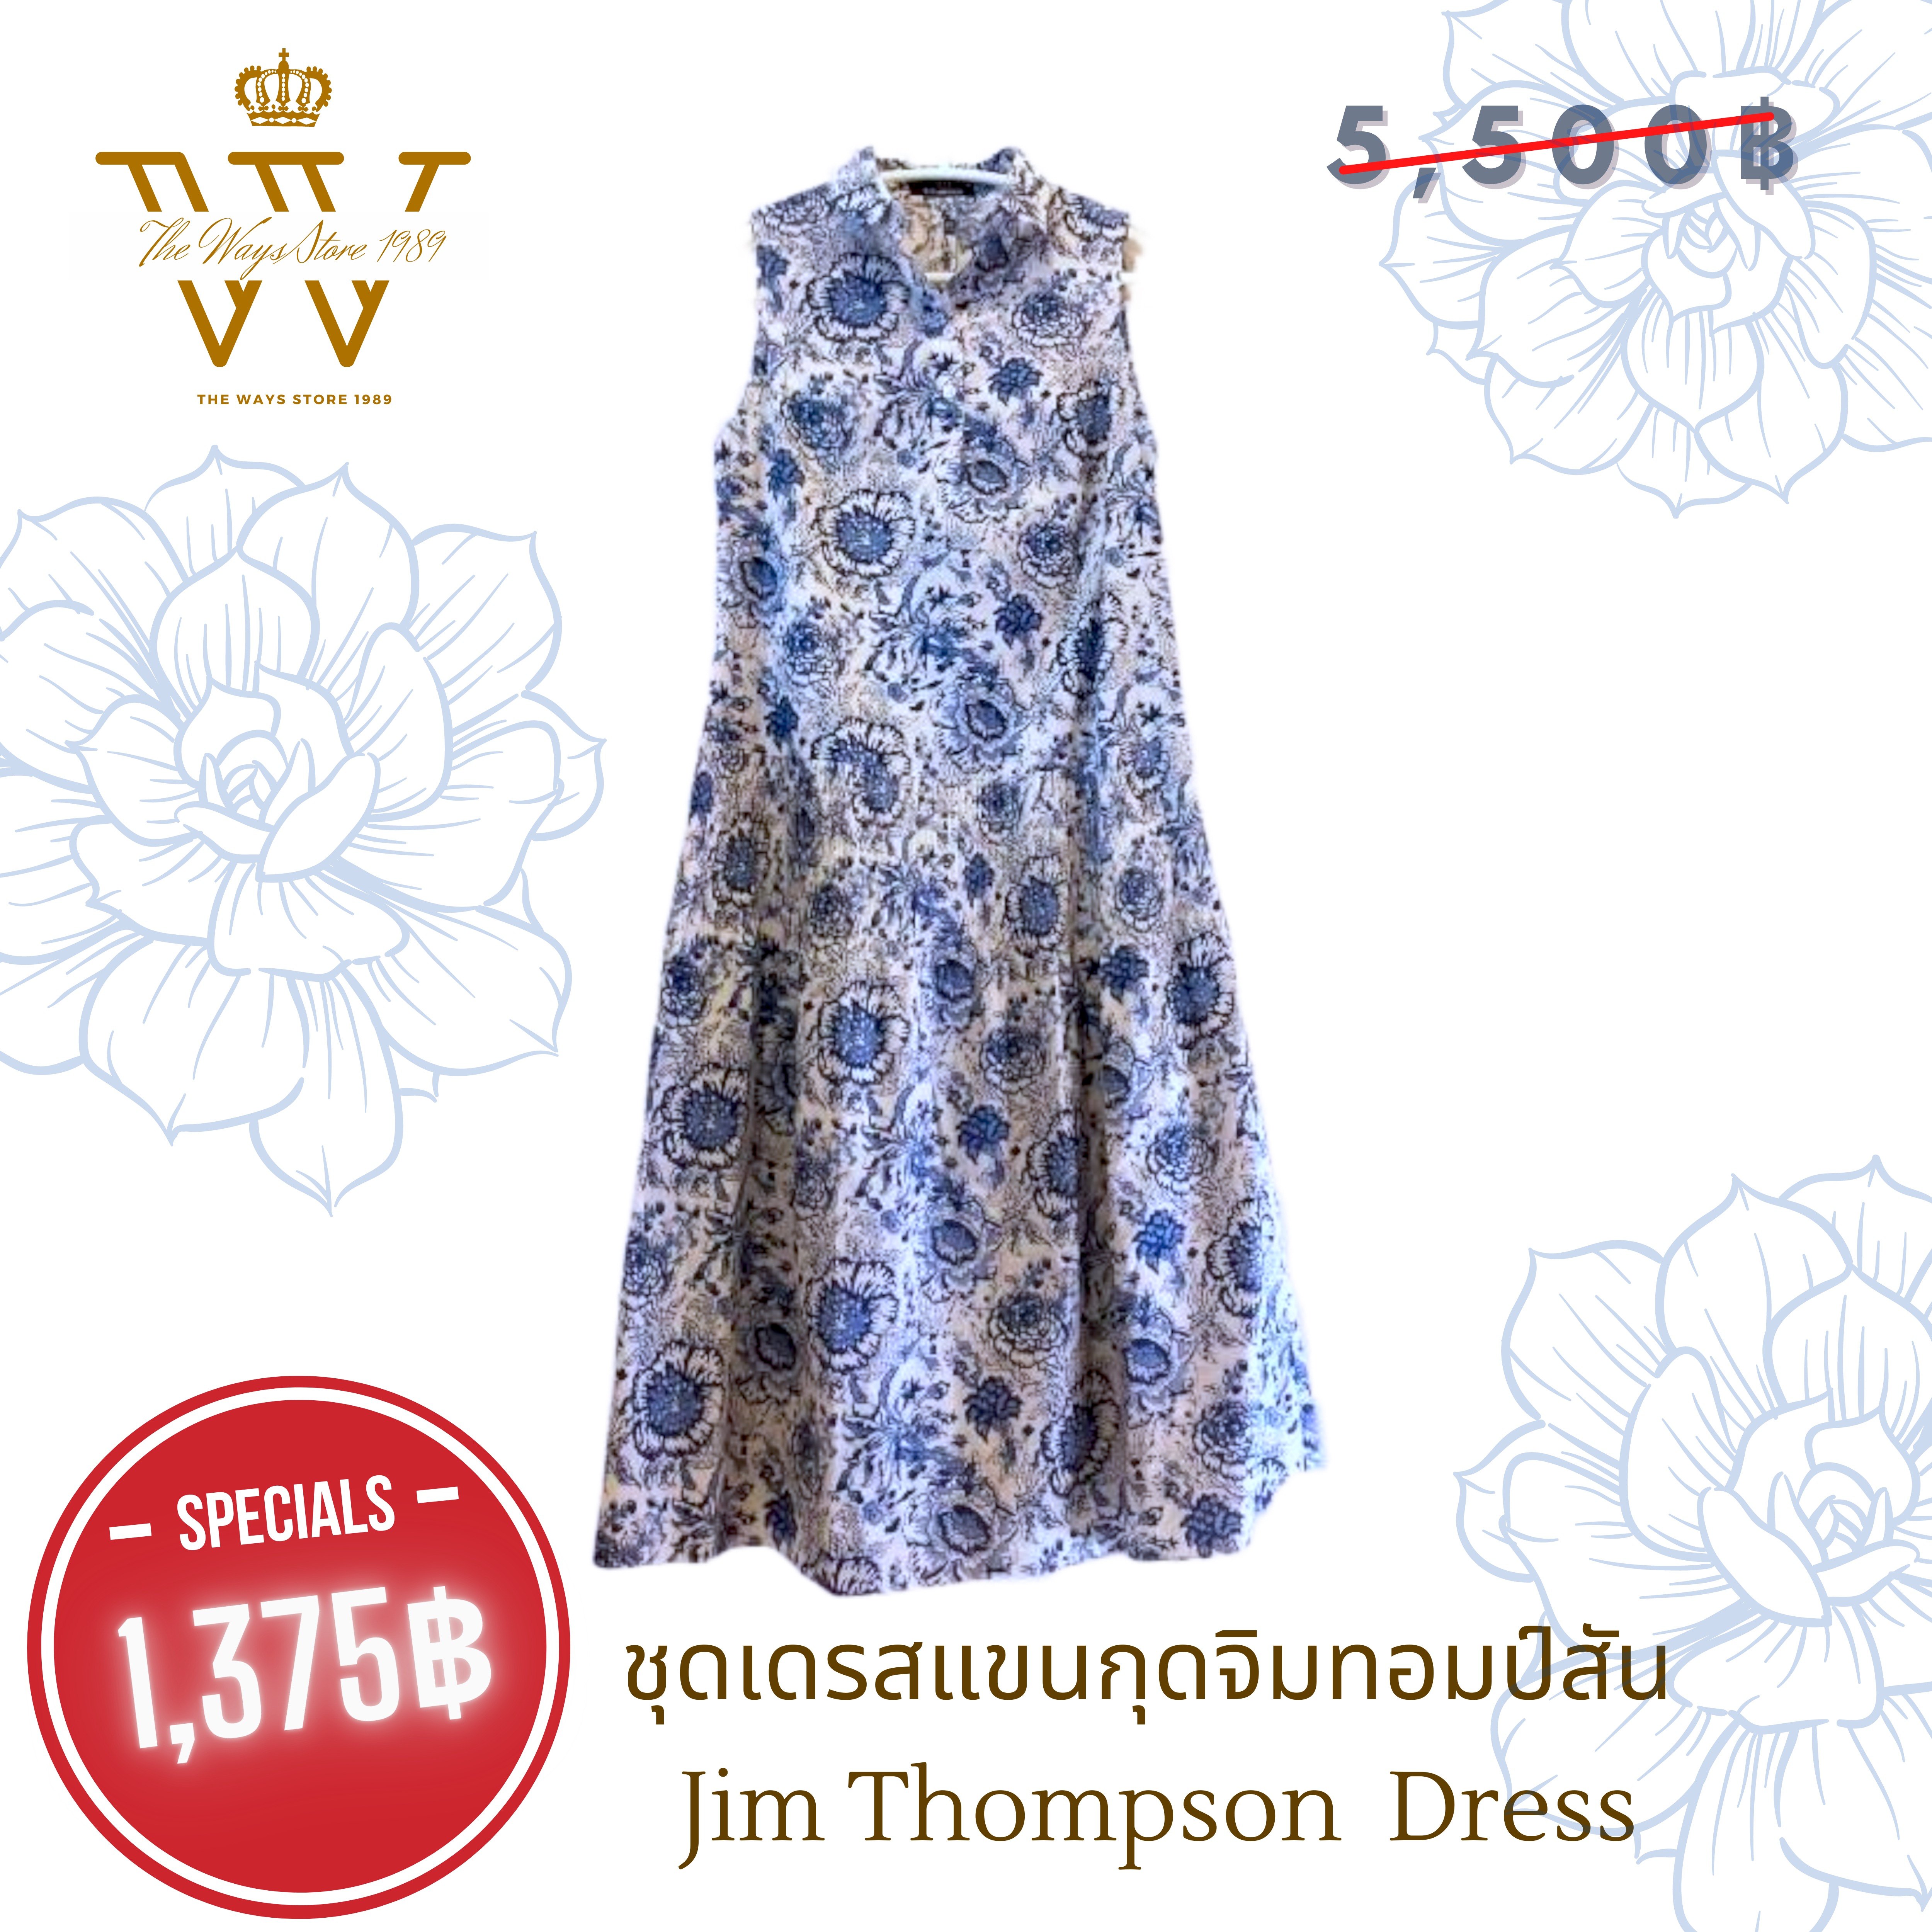 Jim Thompson Dress ราคาถูก ซื้อออนไลน์ที่ - พ.ค. 2022 | Lazada.co.th